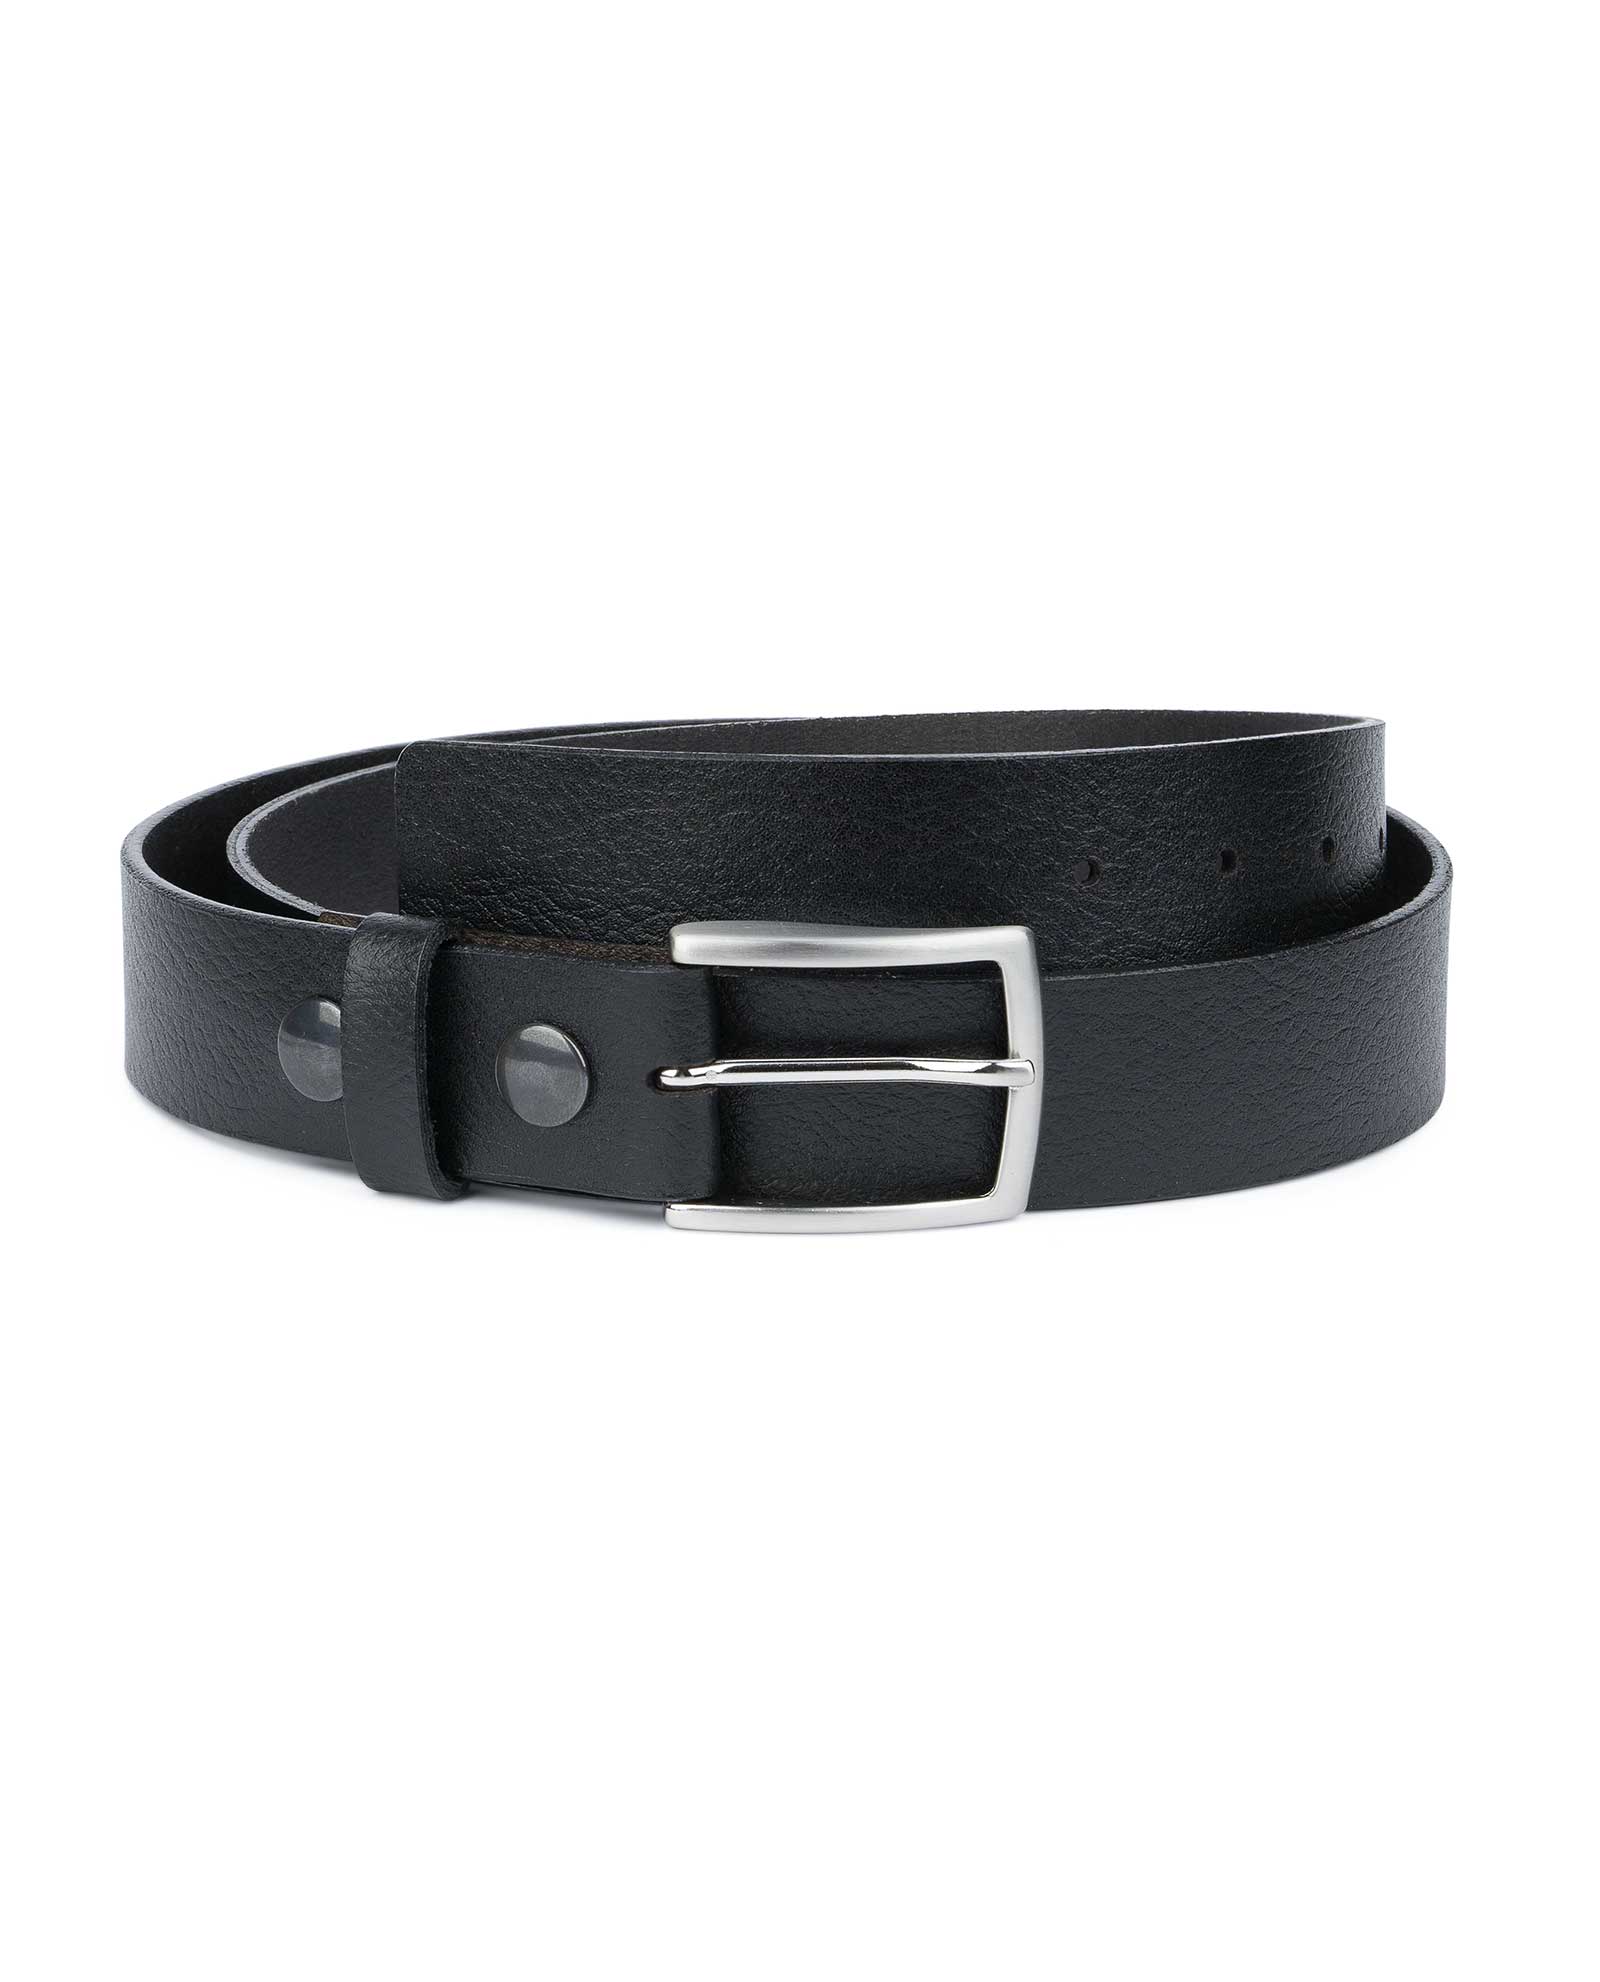 https://leatherbeltsonline.com/wp-content/uploads/2019/09/Belt-With-Removable-Buckle-Italian-Leather-Capo-Pelle.jpg